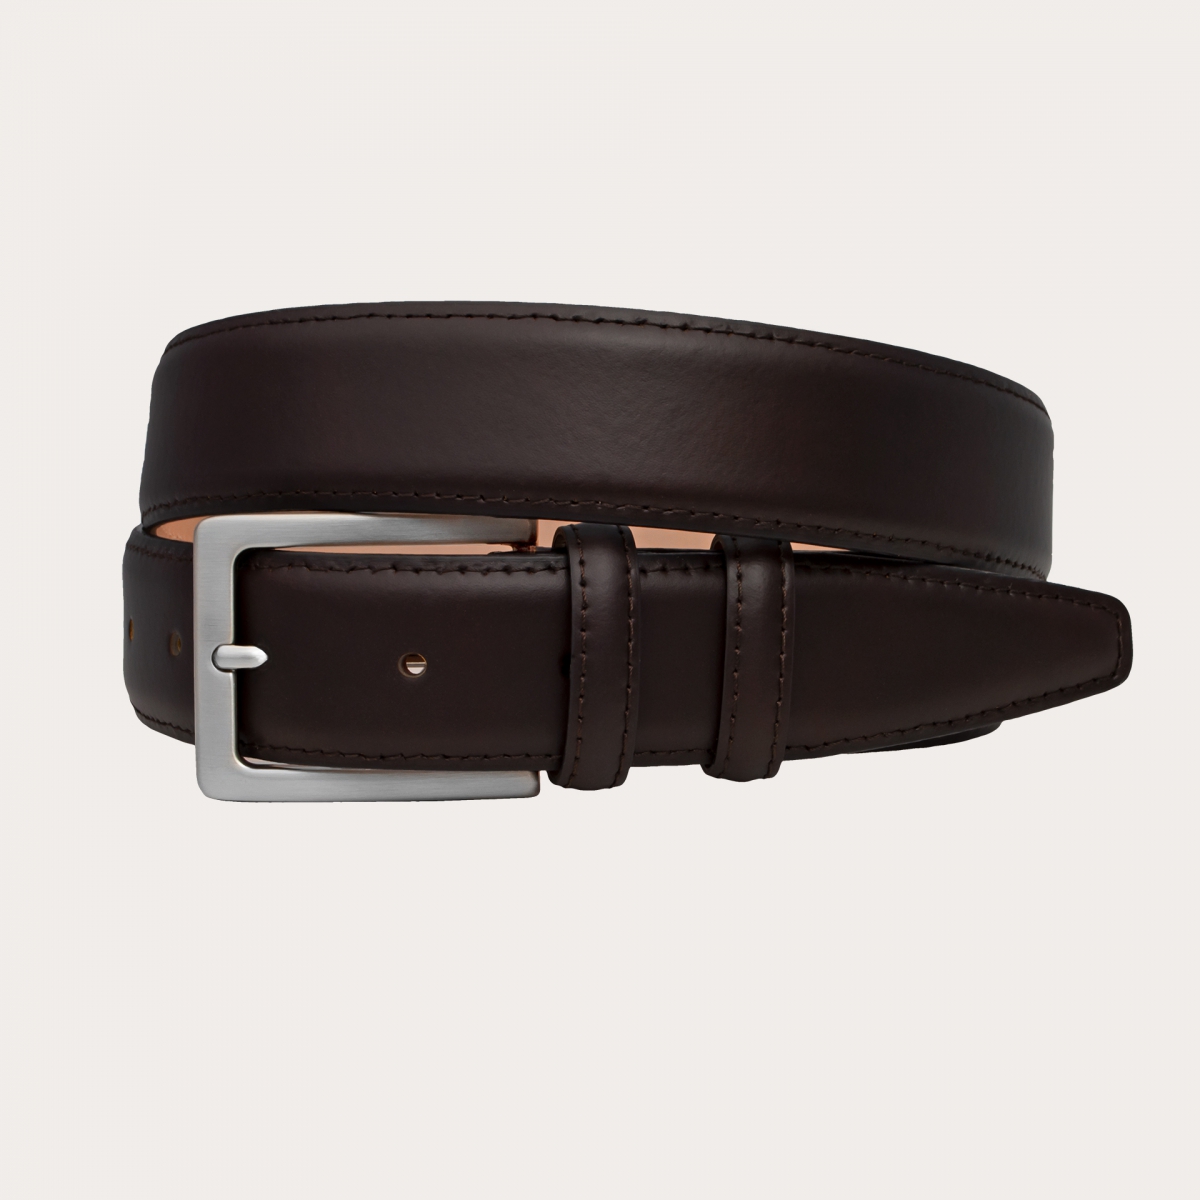 BRUCLE Classic dark brown leather dress belt